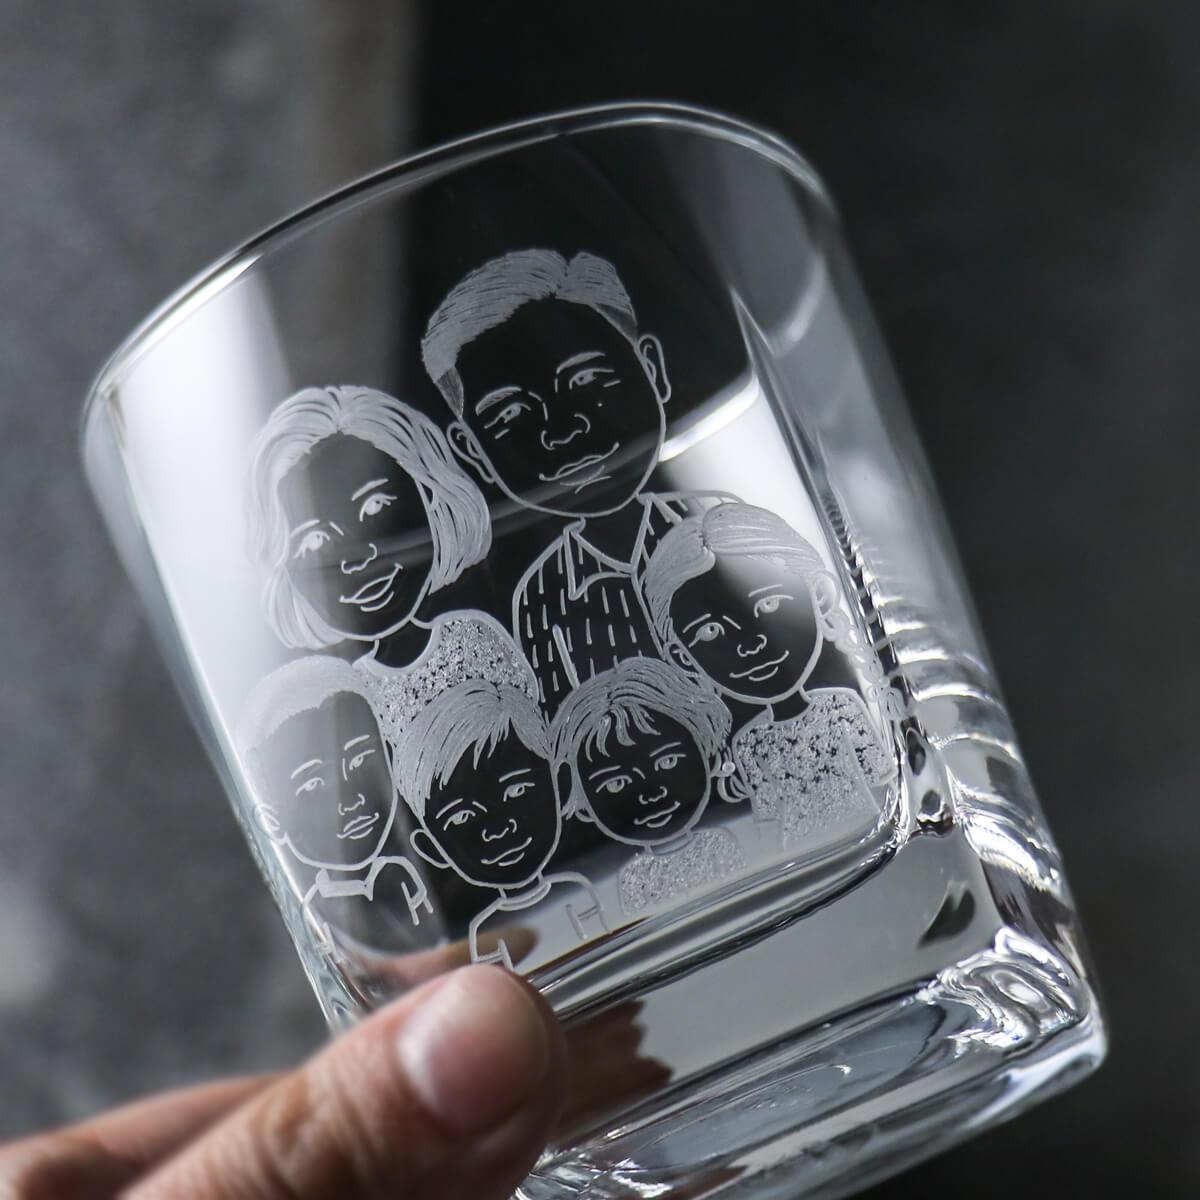 295cc【全家福】(6人Q版)一家人幸福時刻 肖像客製威士忌杯 - MSA玻璃雕刻